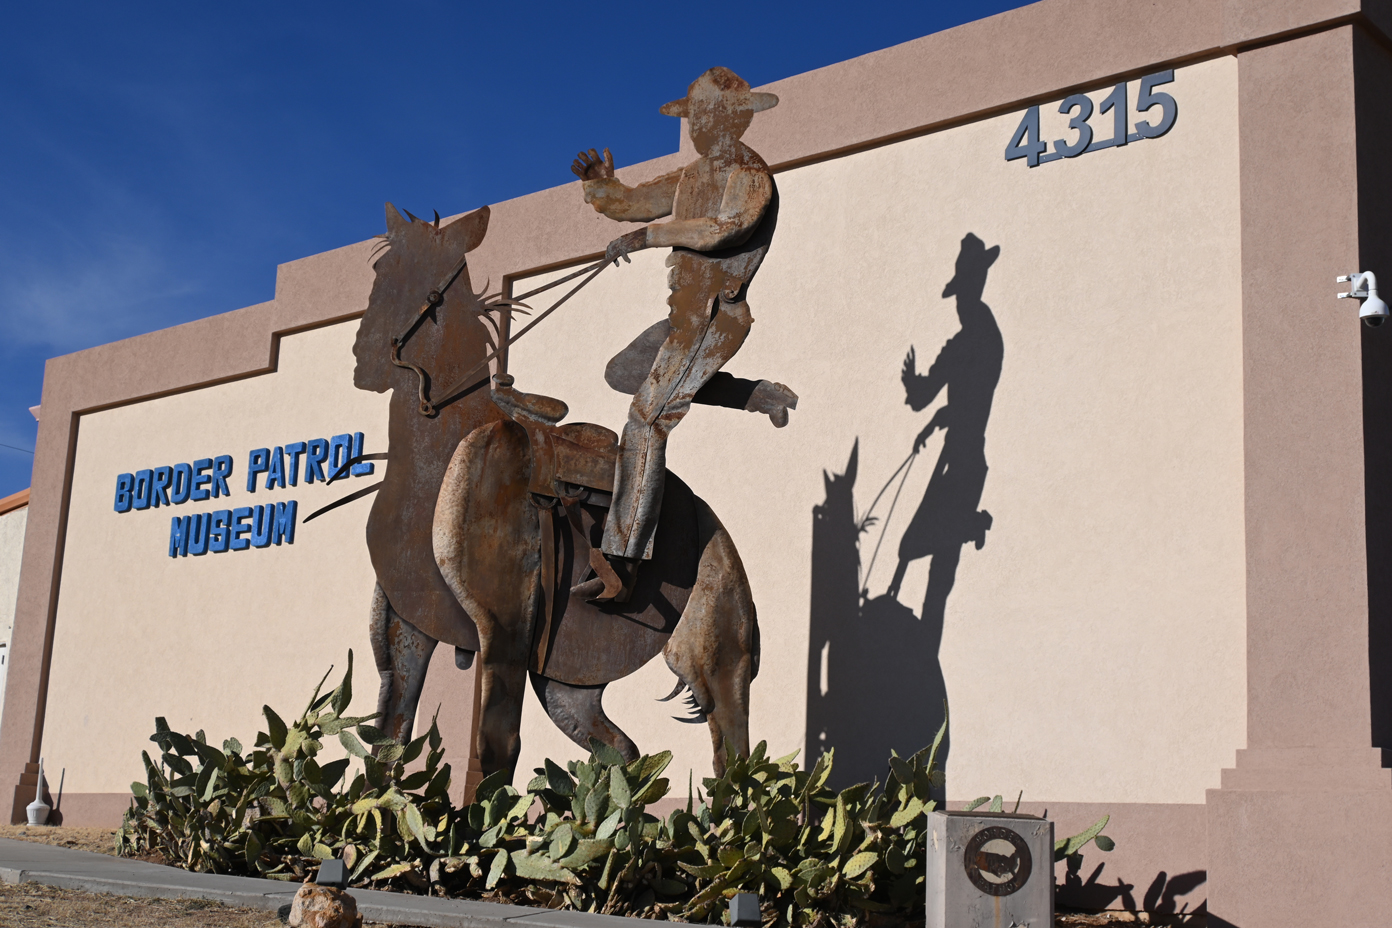 The Border Patrol Museum in El Paso, TX is a must stop